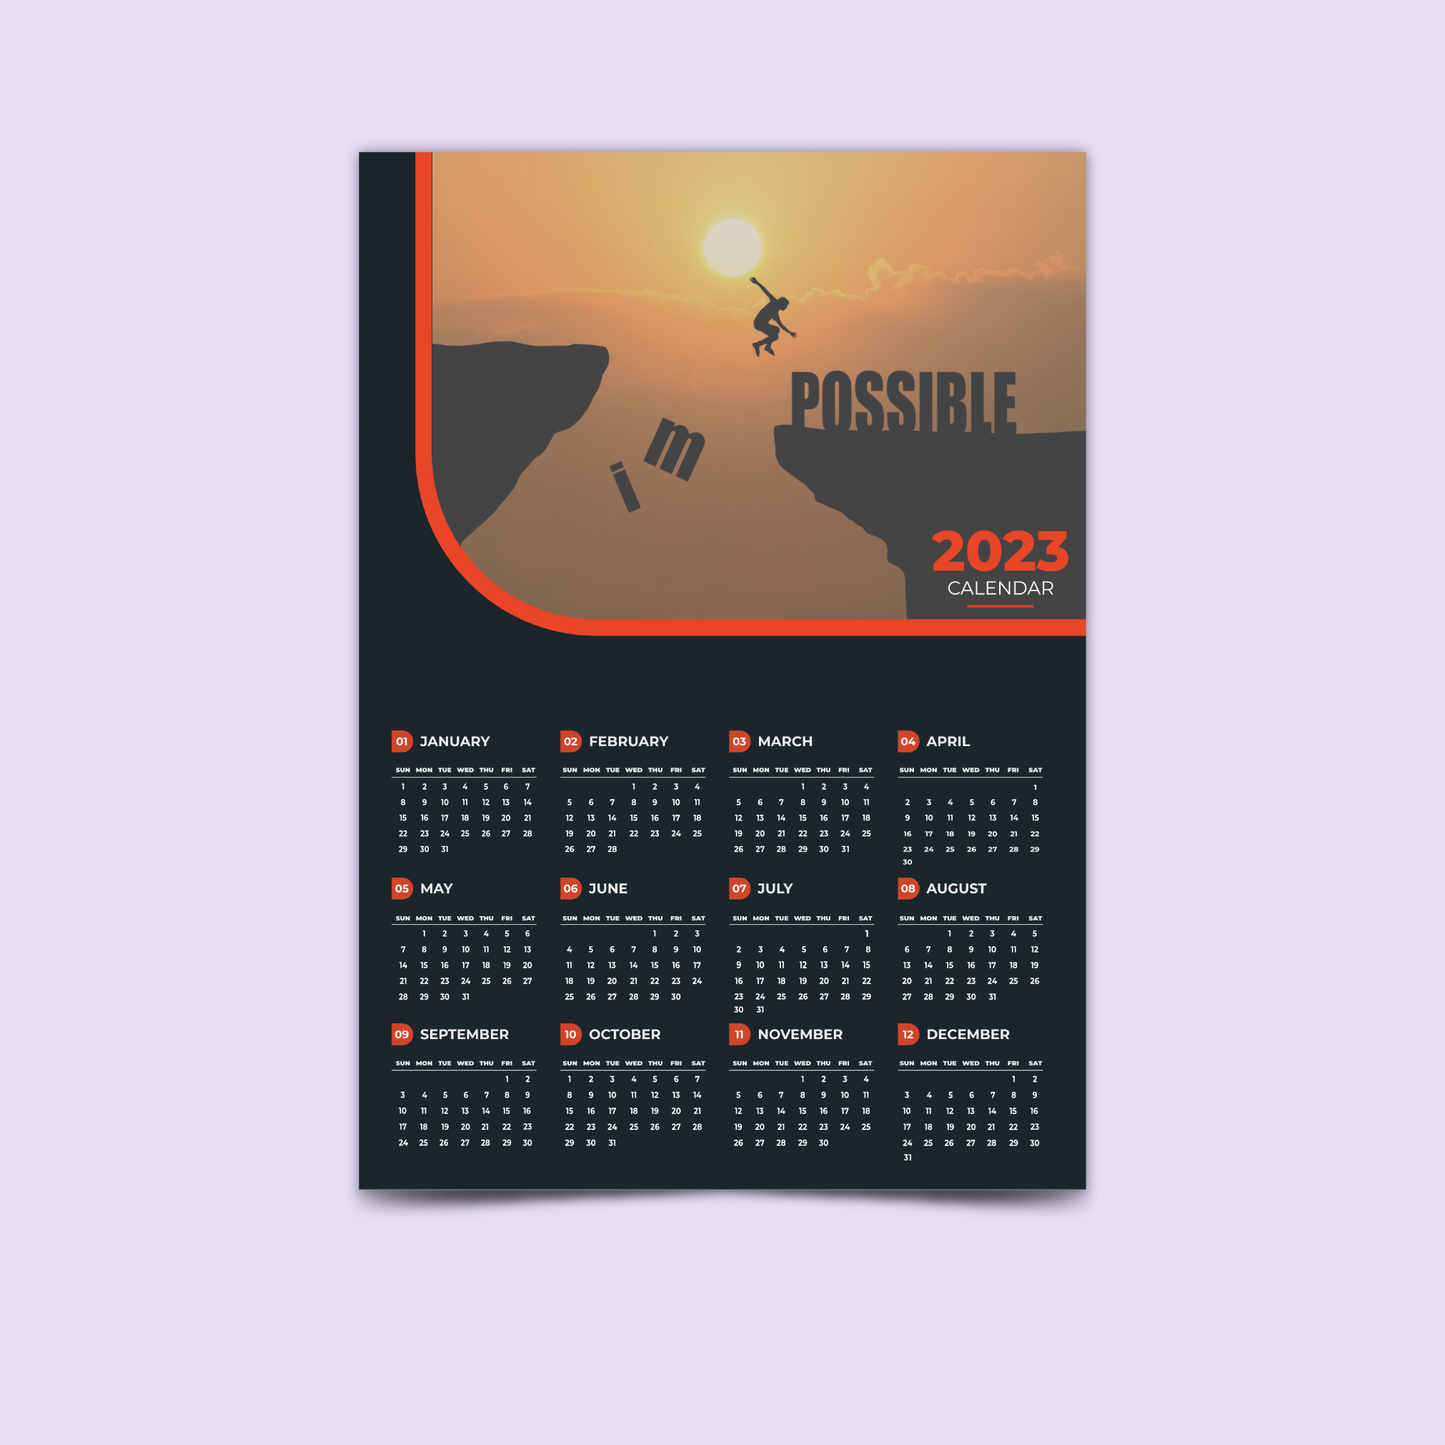 Yearly Calendar 2023